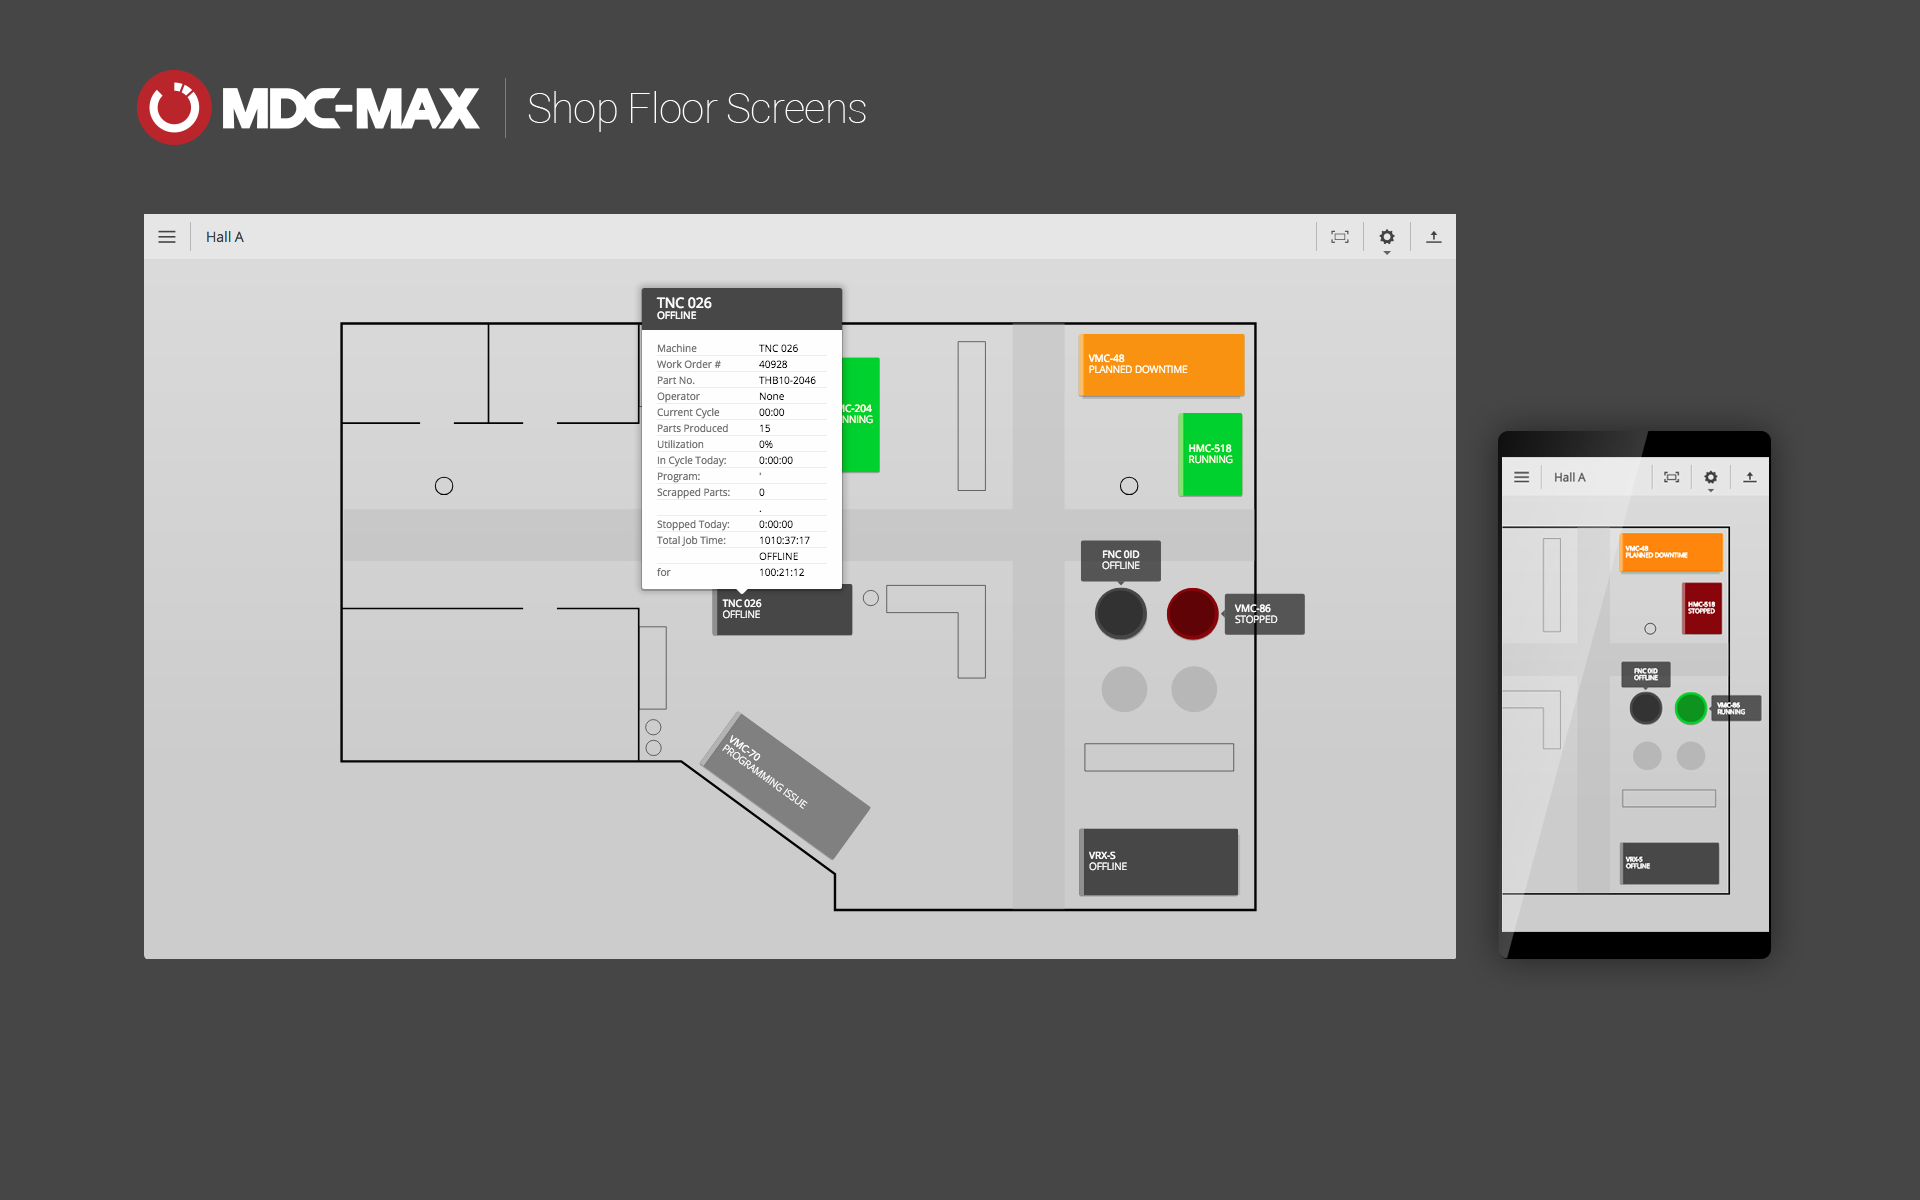 Attent Slink zuiverheid Shop Floor Screens for MDC-Max released | CIMCO